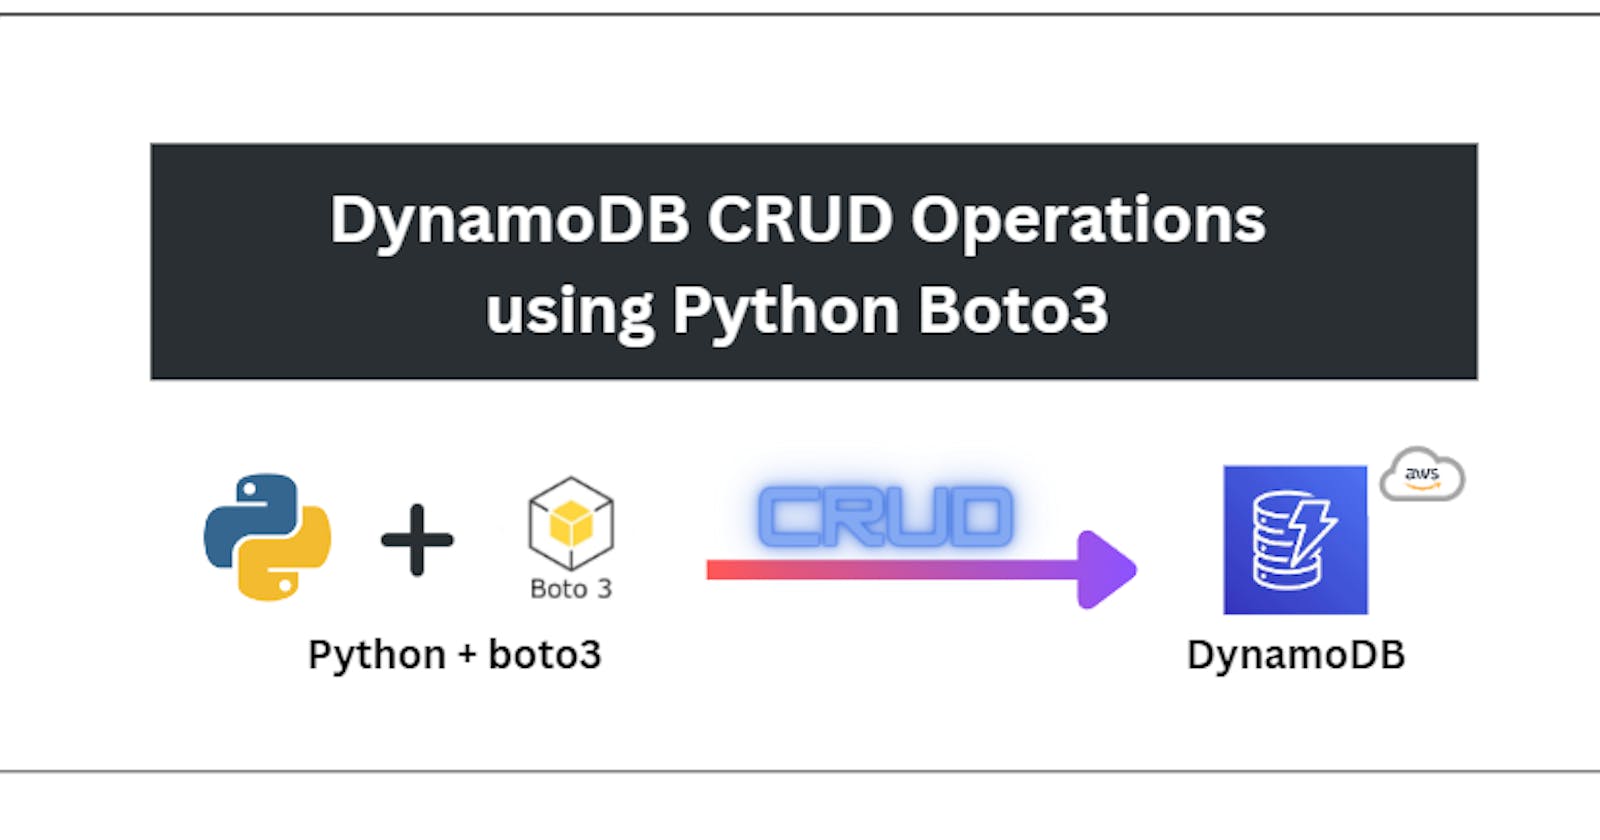 Implementing DynamoDB CRUD operations using AWS SDKs (Python boto3)